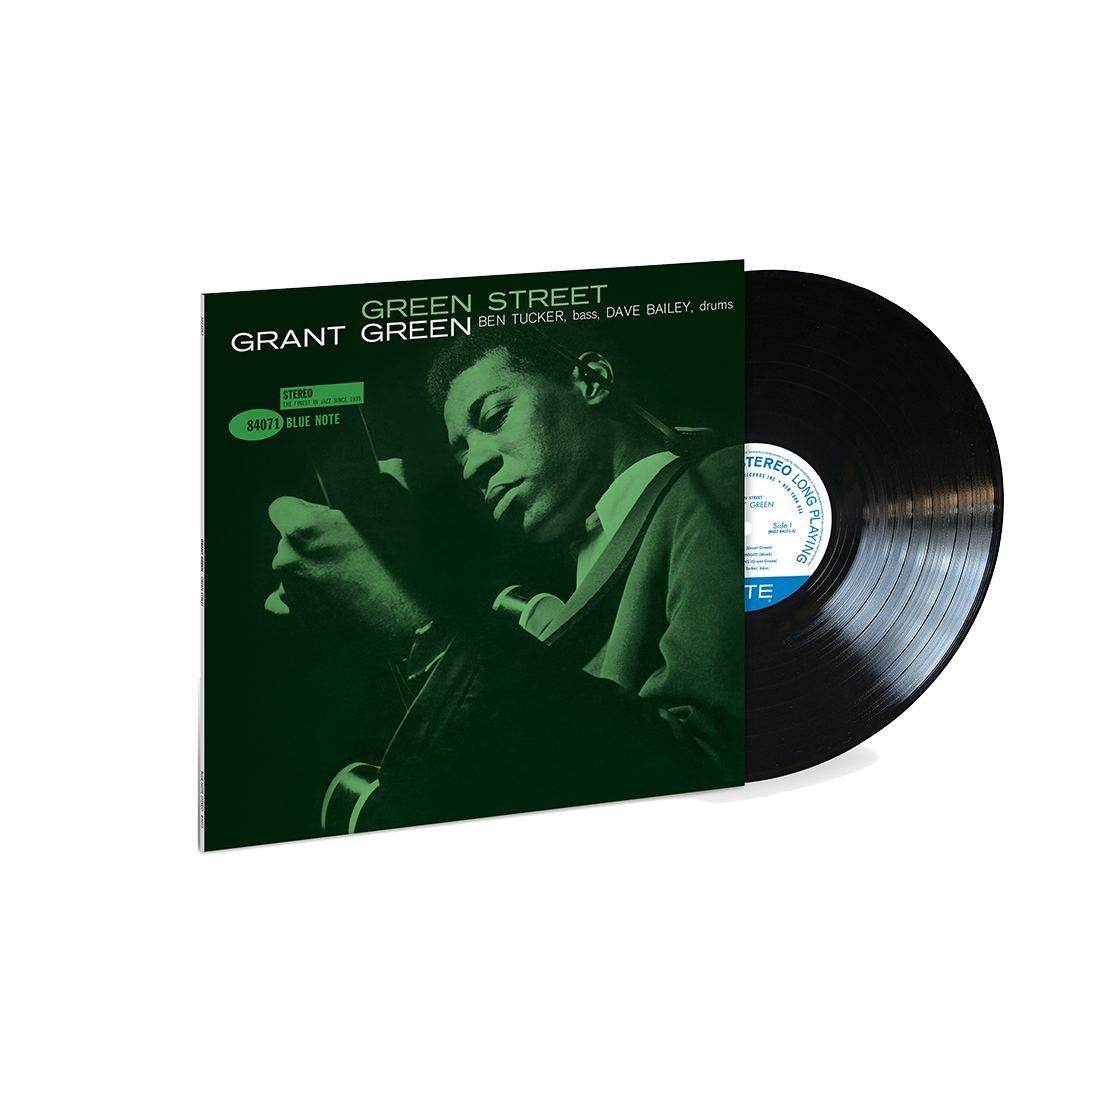 Grant Green - Green Street (Classic Vinyl Series): Vinyl LP